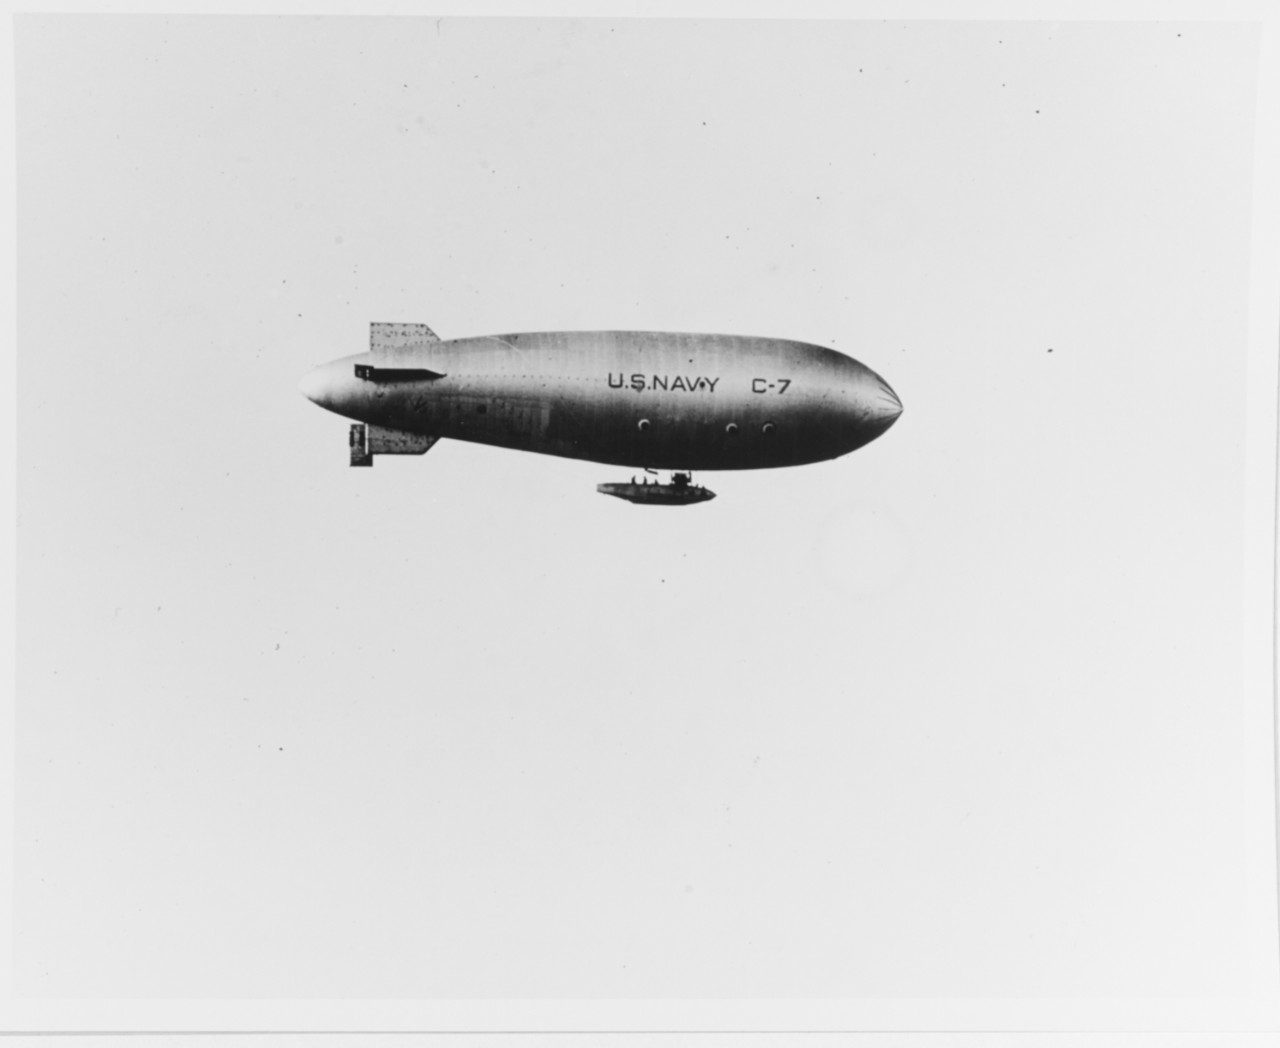 U.S. Navy Blimp C-7